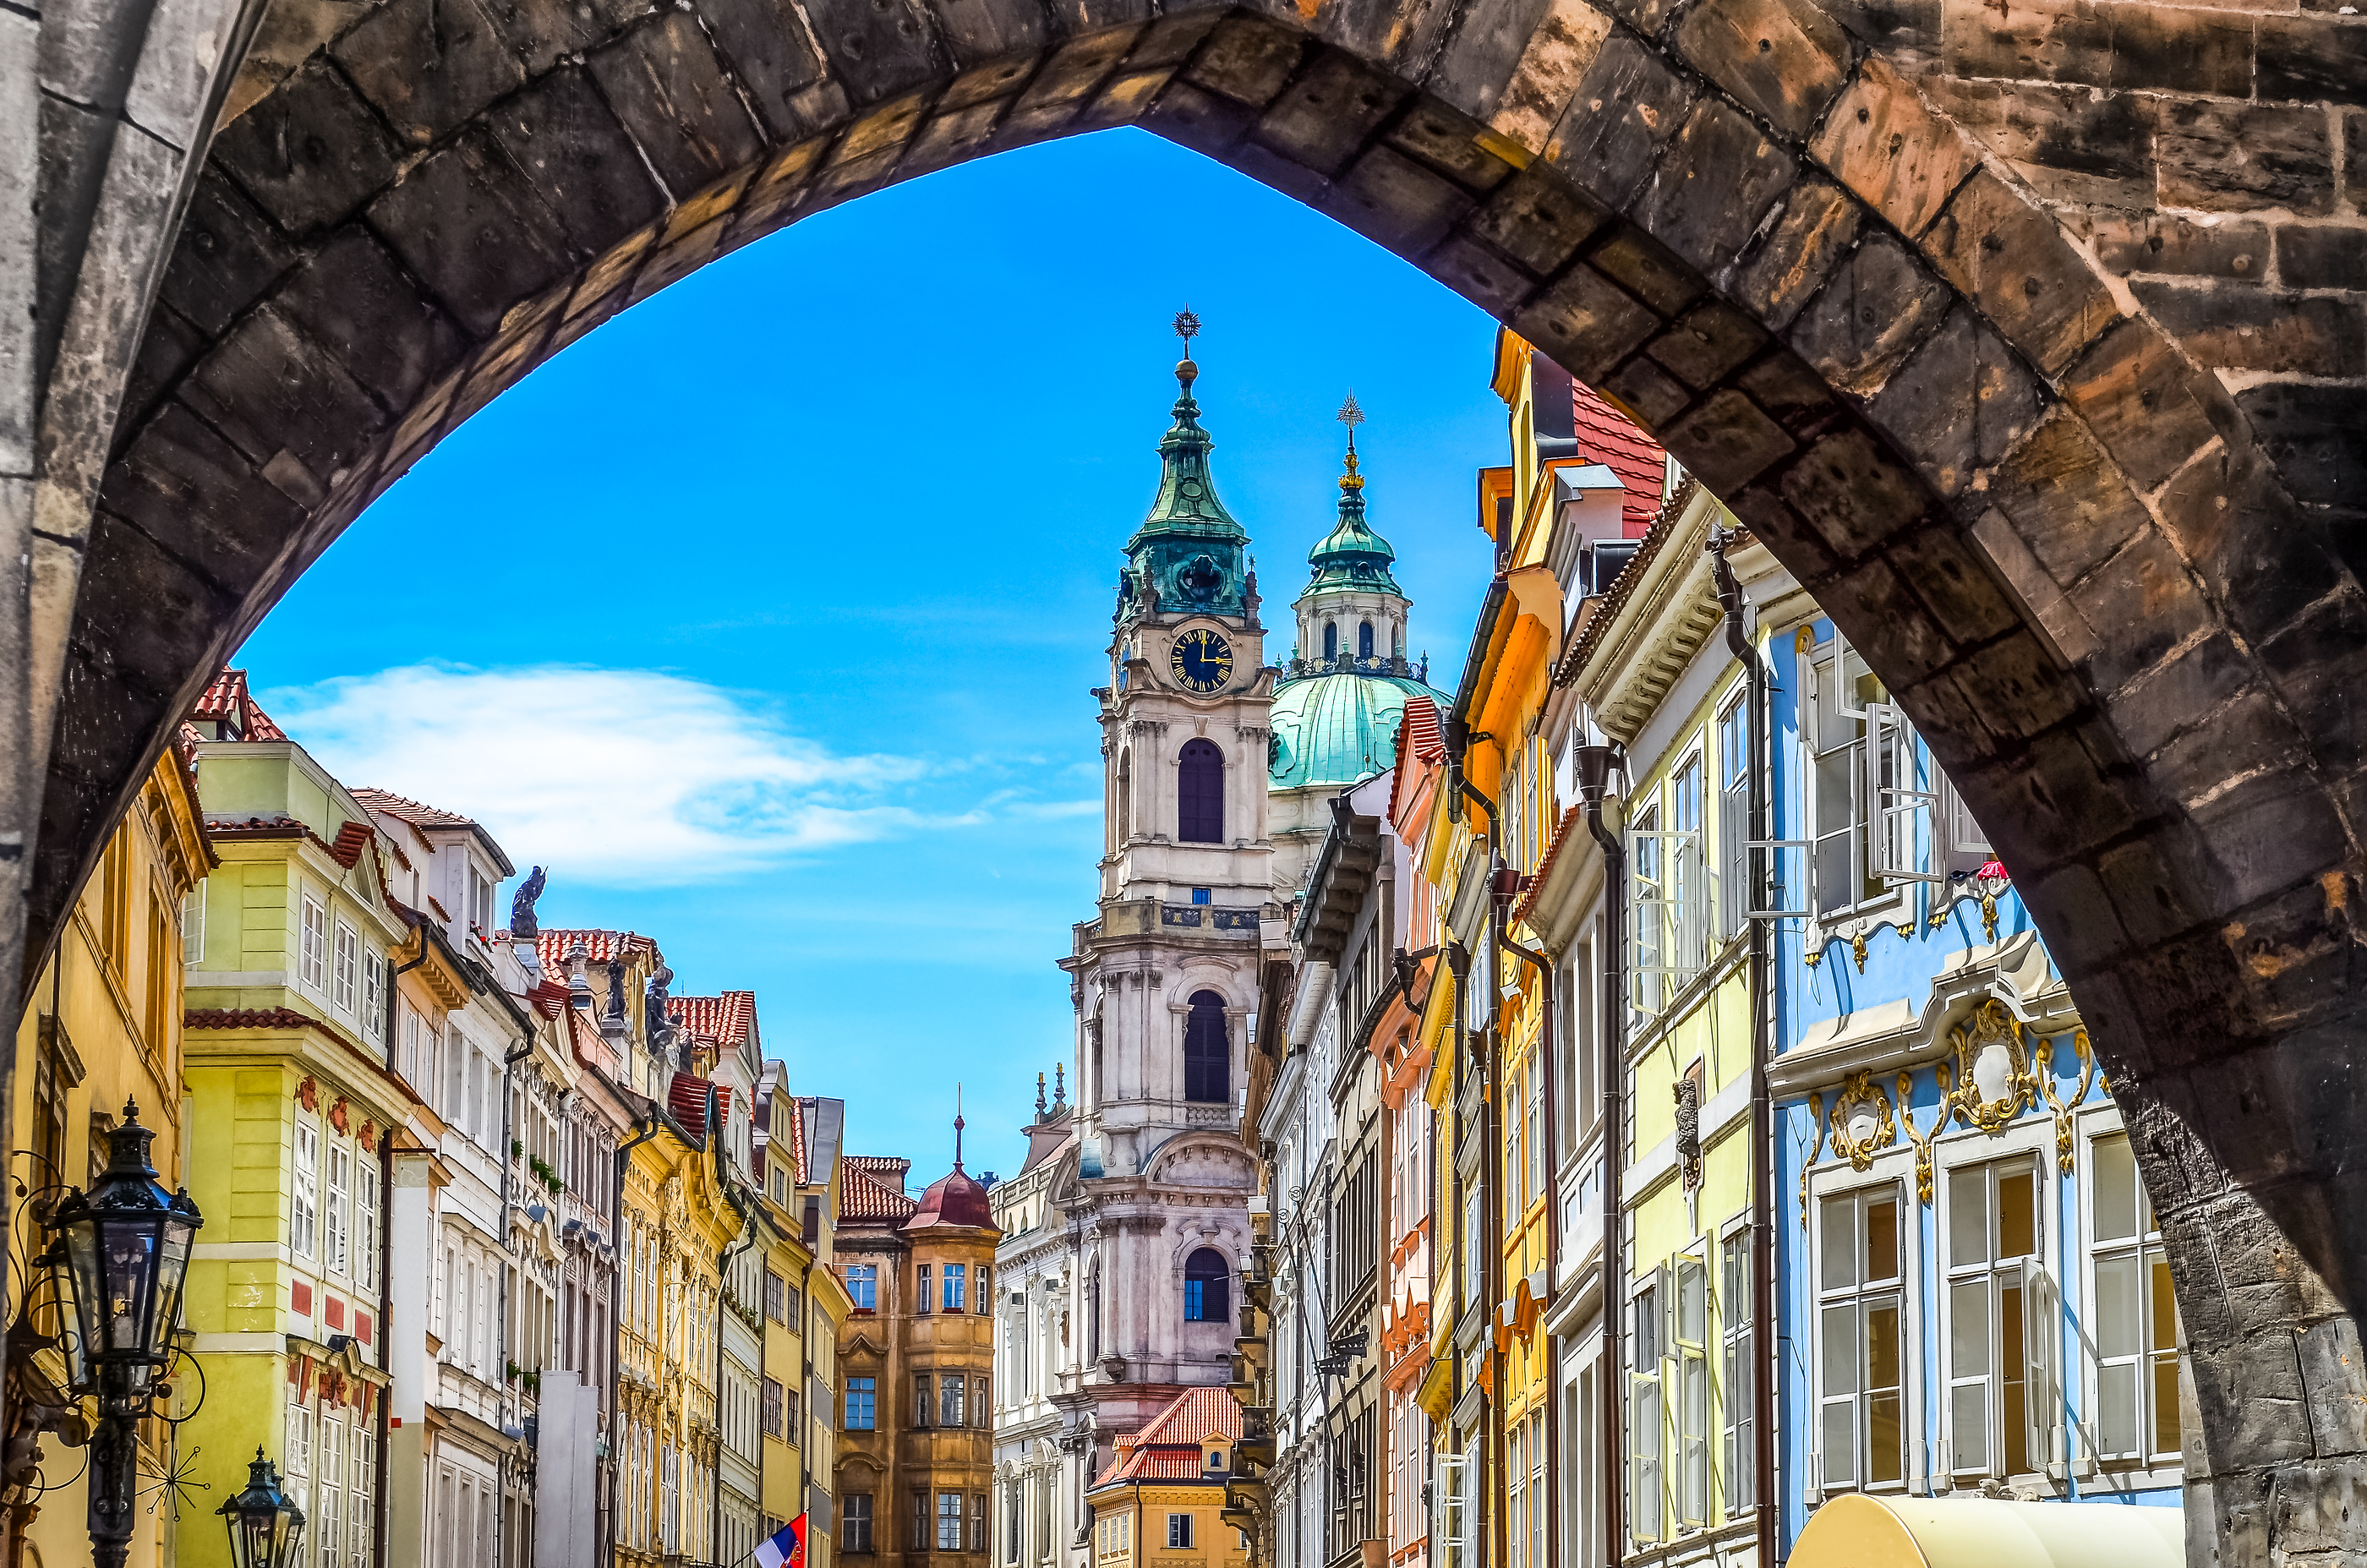 View Of Old Town In Prague Taken From Charles Bridge - Emerging ...